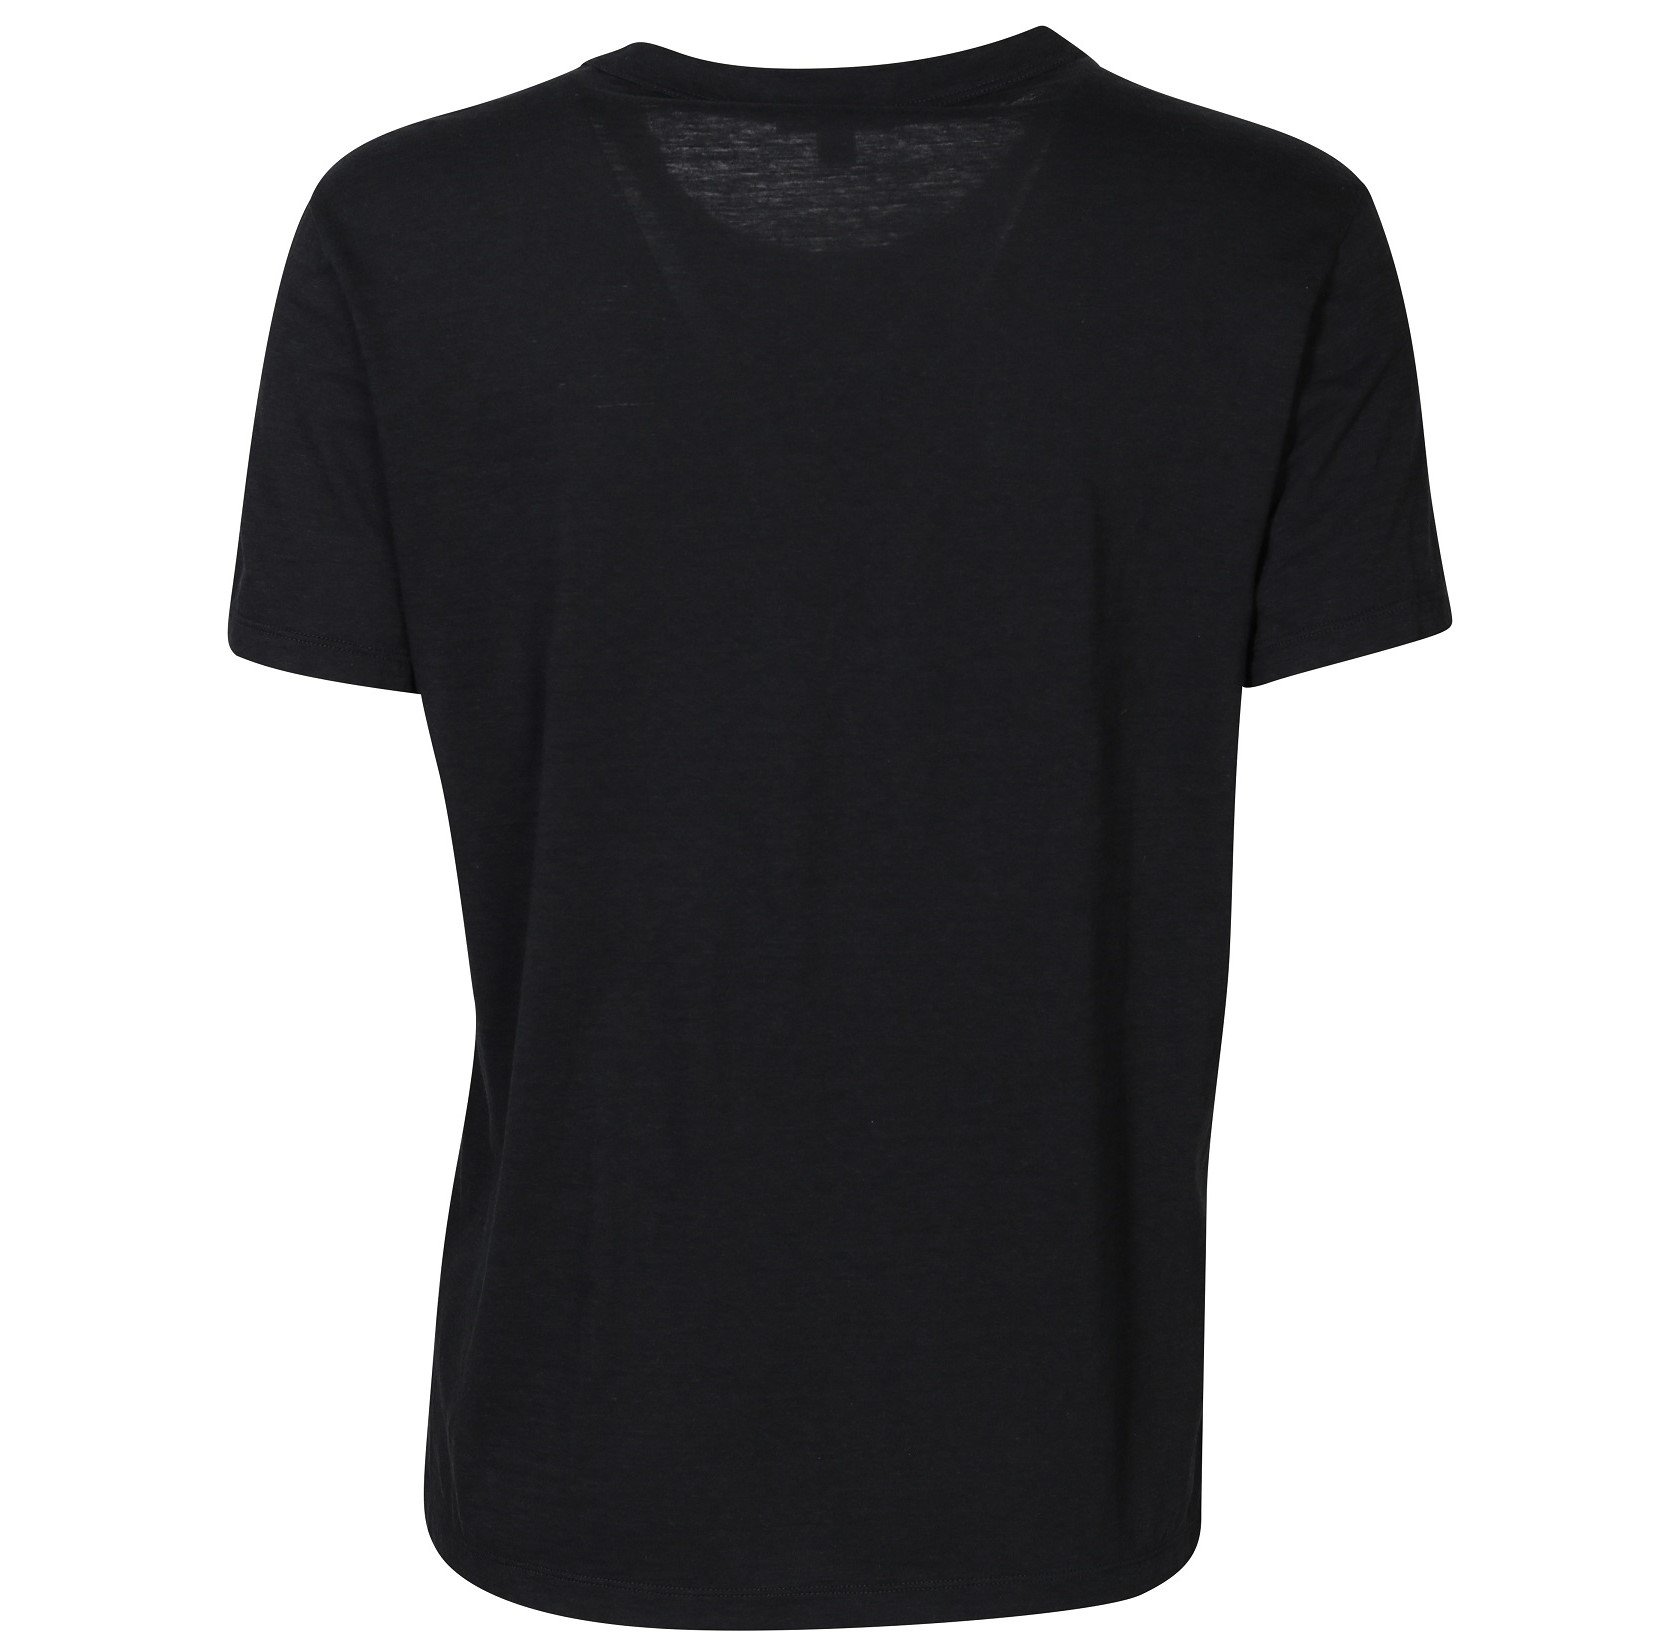 JAMES PERSE Lotus Jersey T-Shirt in Black 1/S